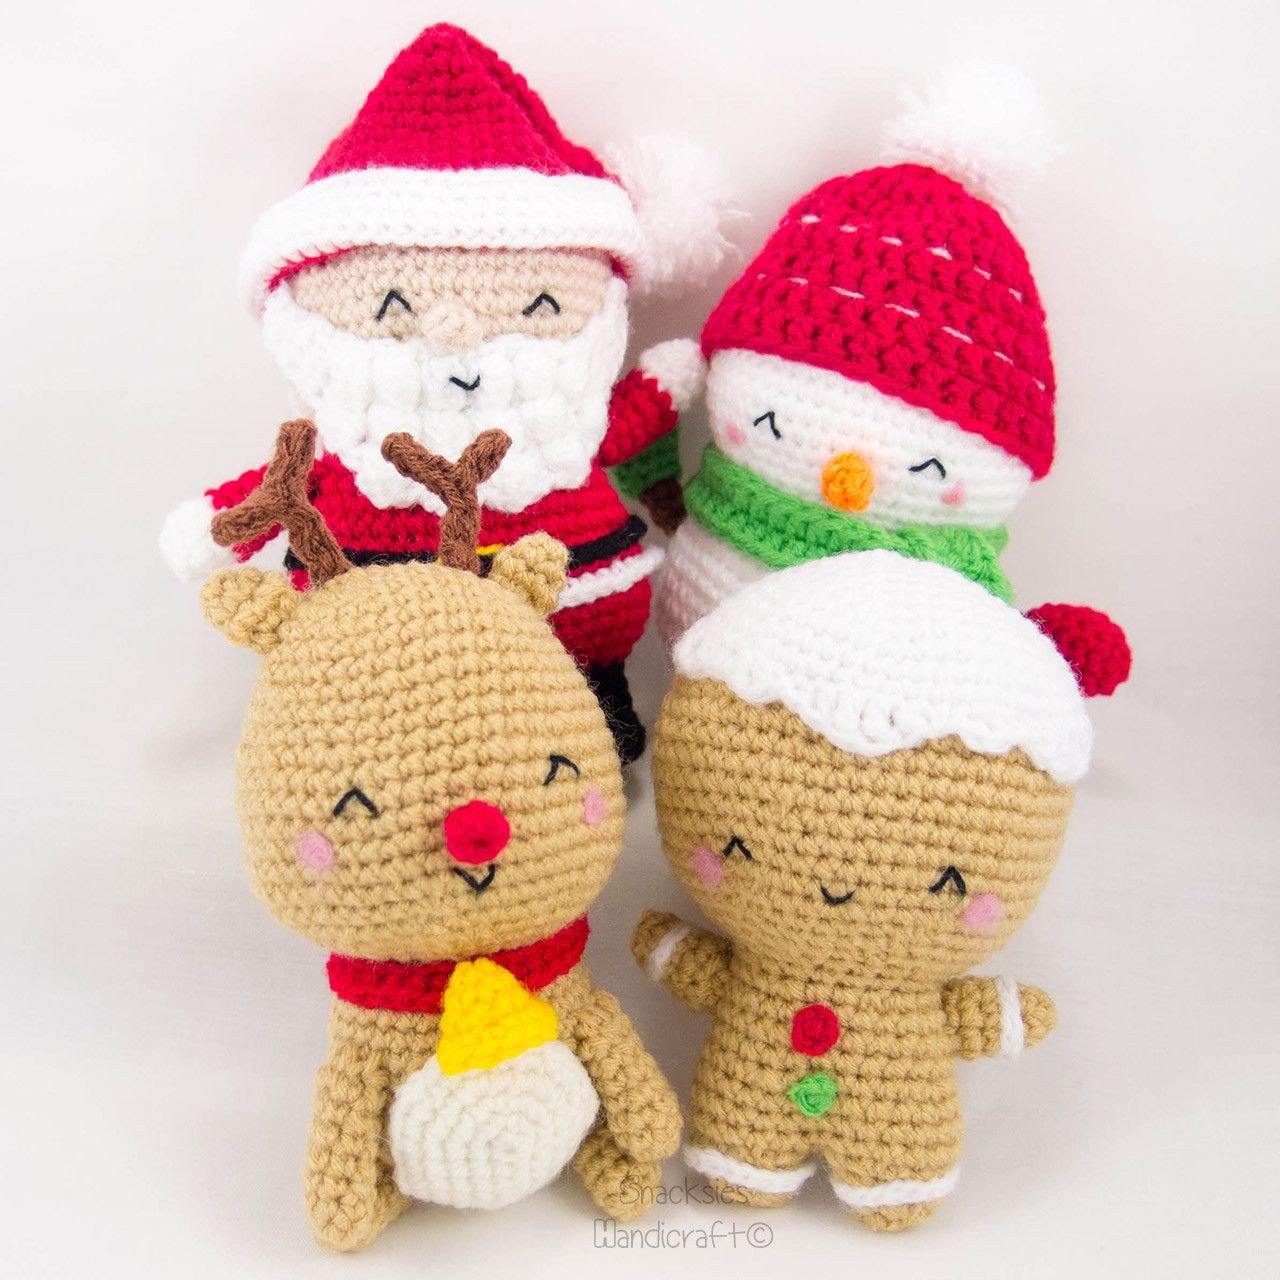 Crochet Christmas Ornaments - Reindeer, Gingerbread Man, Snowman, Santa Claus